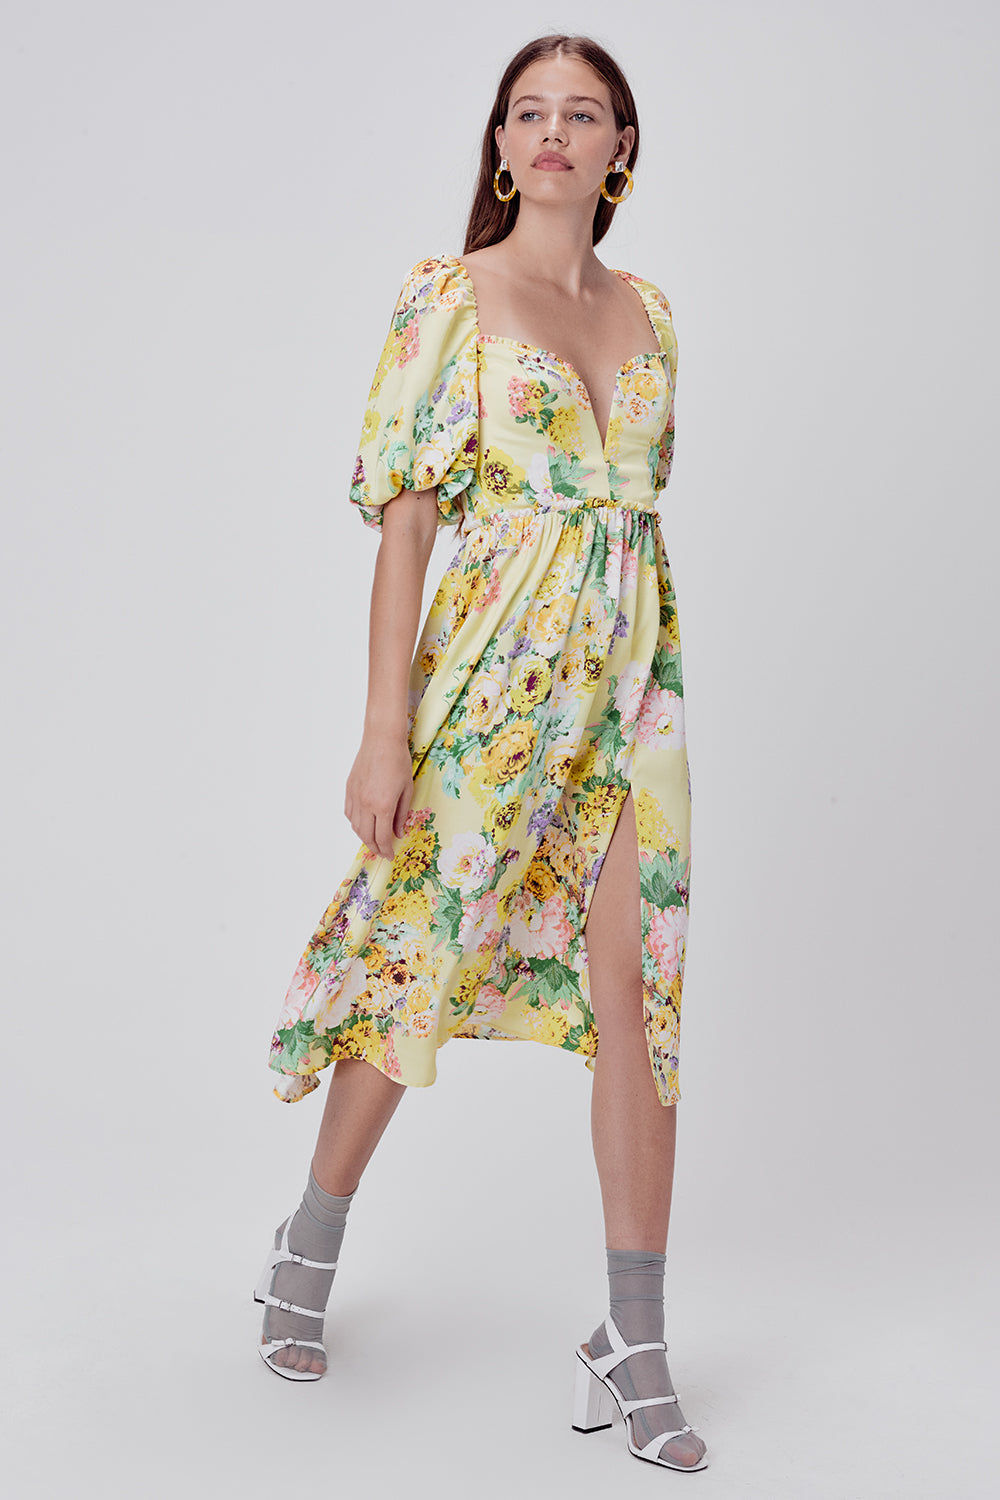 for love and lemons floral dress